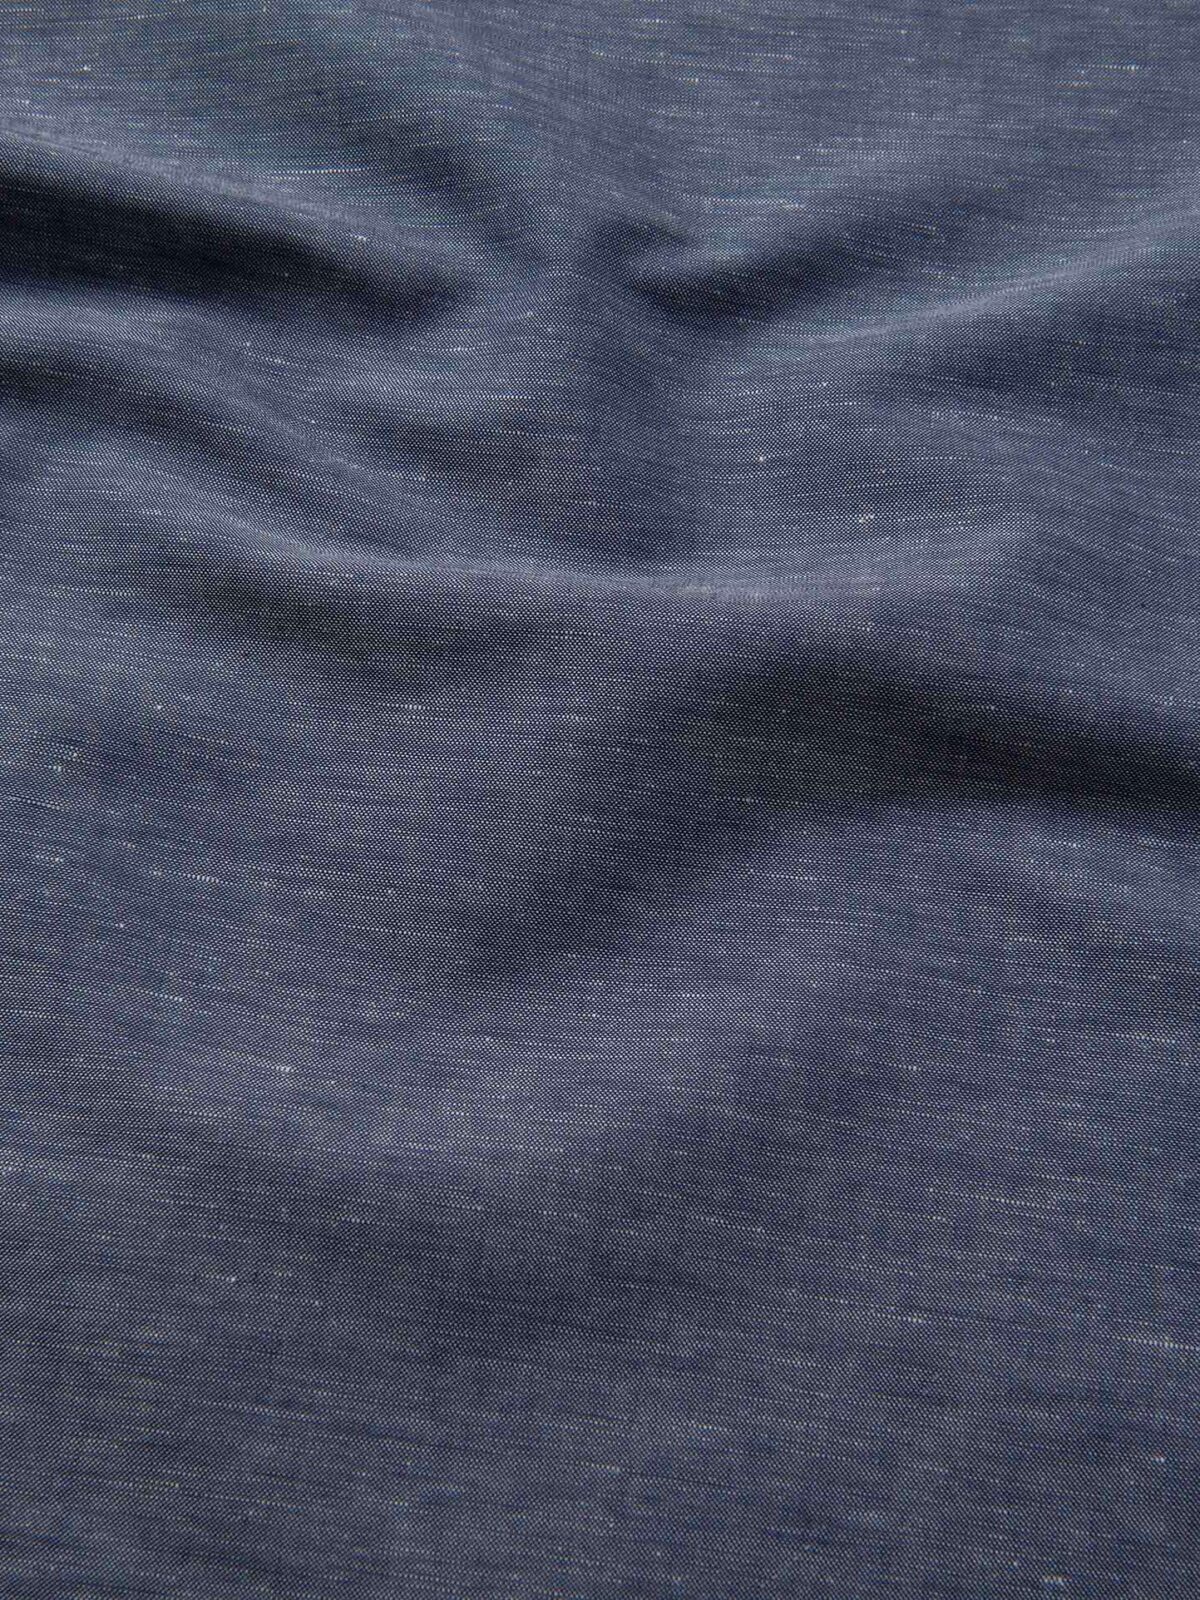 Buy Cotton Linen Fabric Blend Online Australia